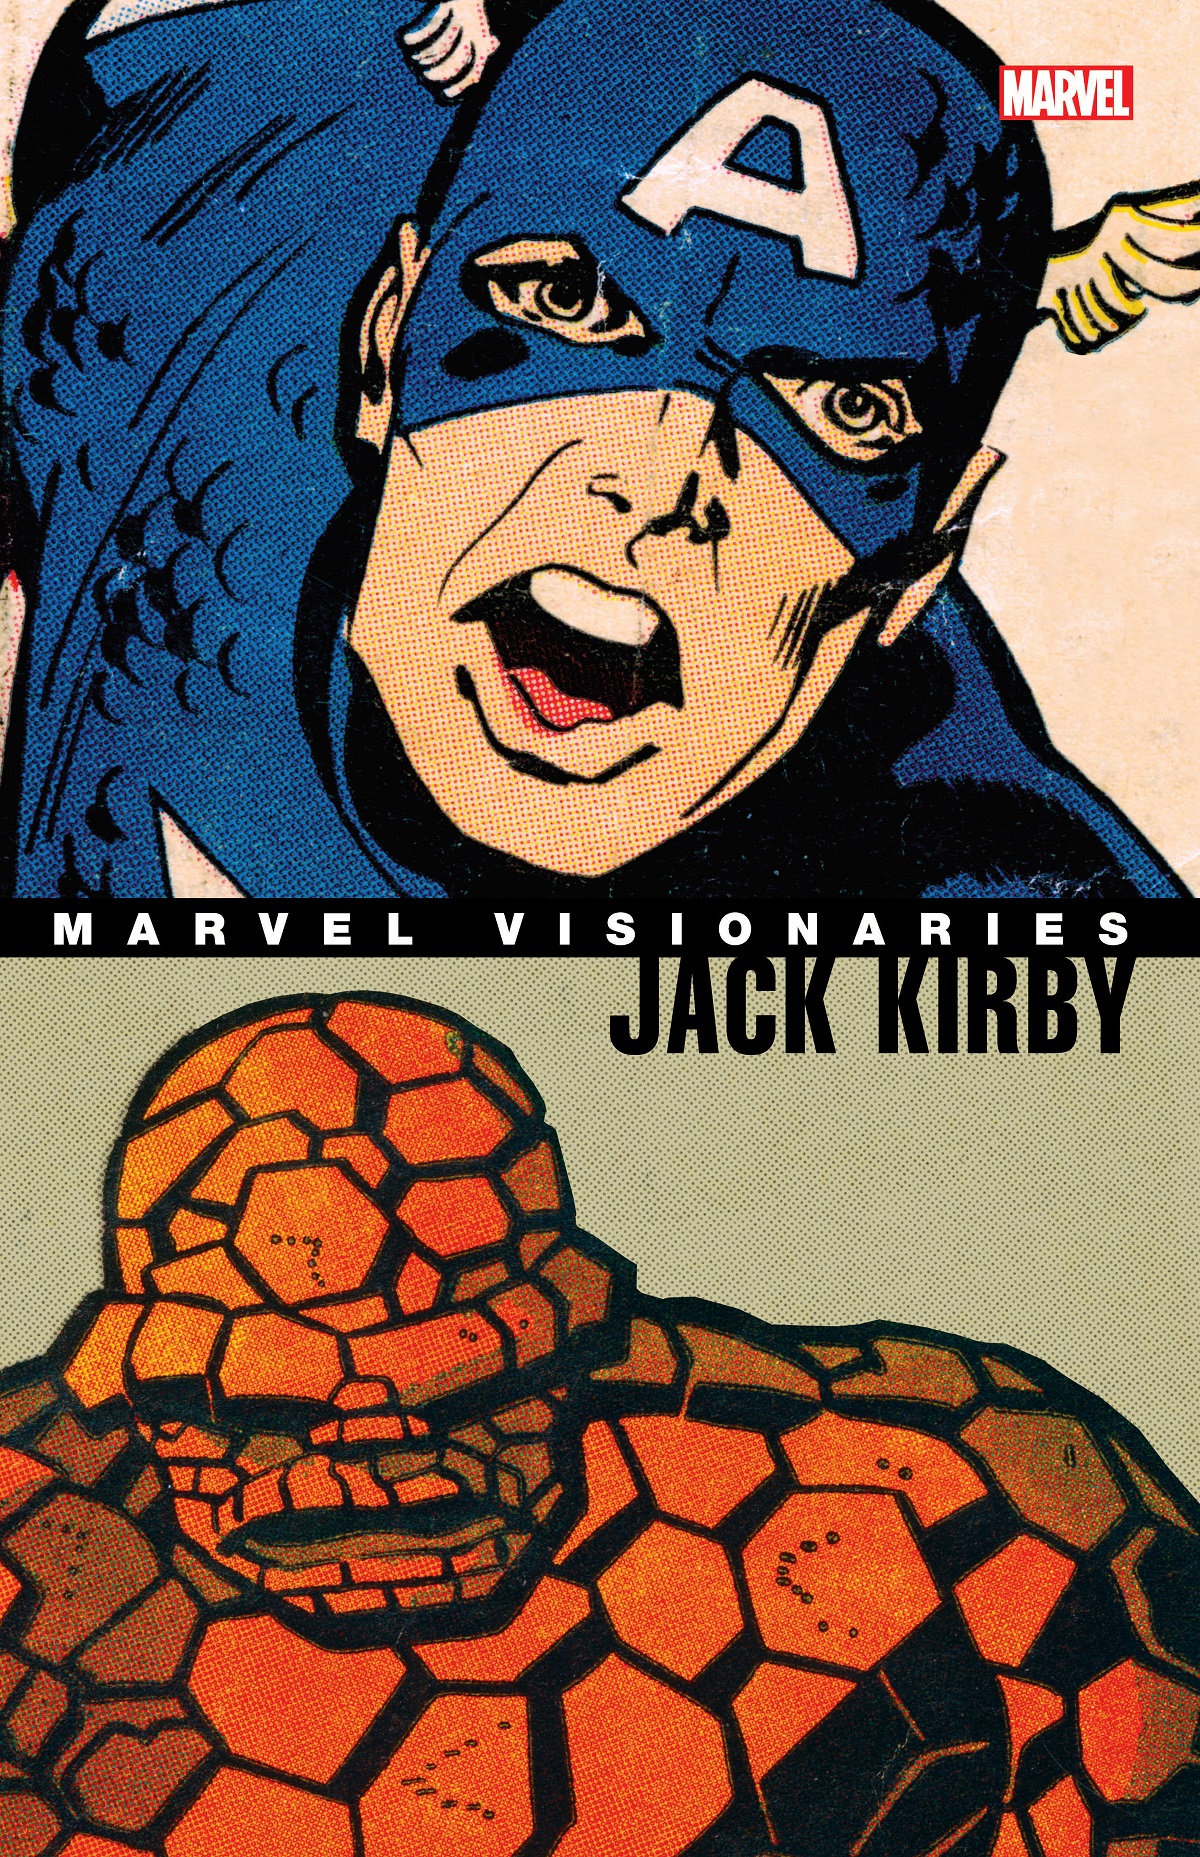 Marvel Visionaries: Jack Kirby (Trade Paperback)